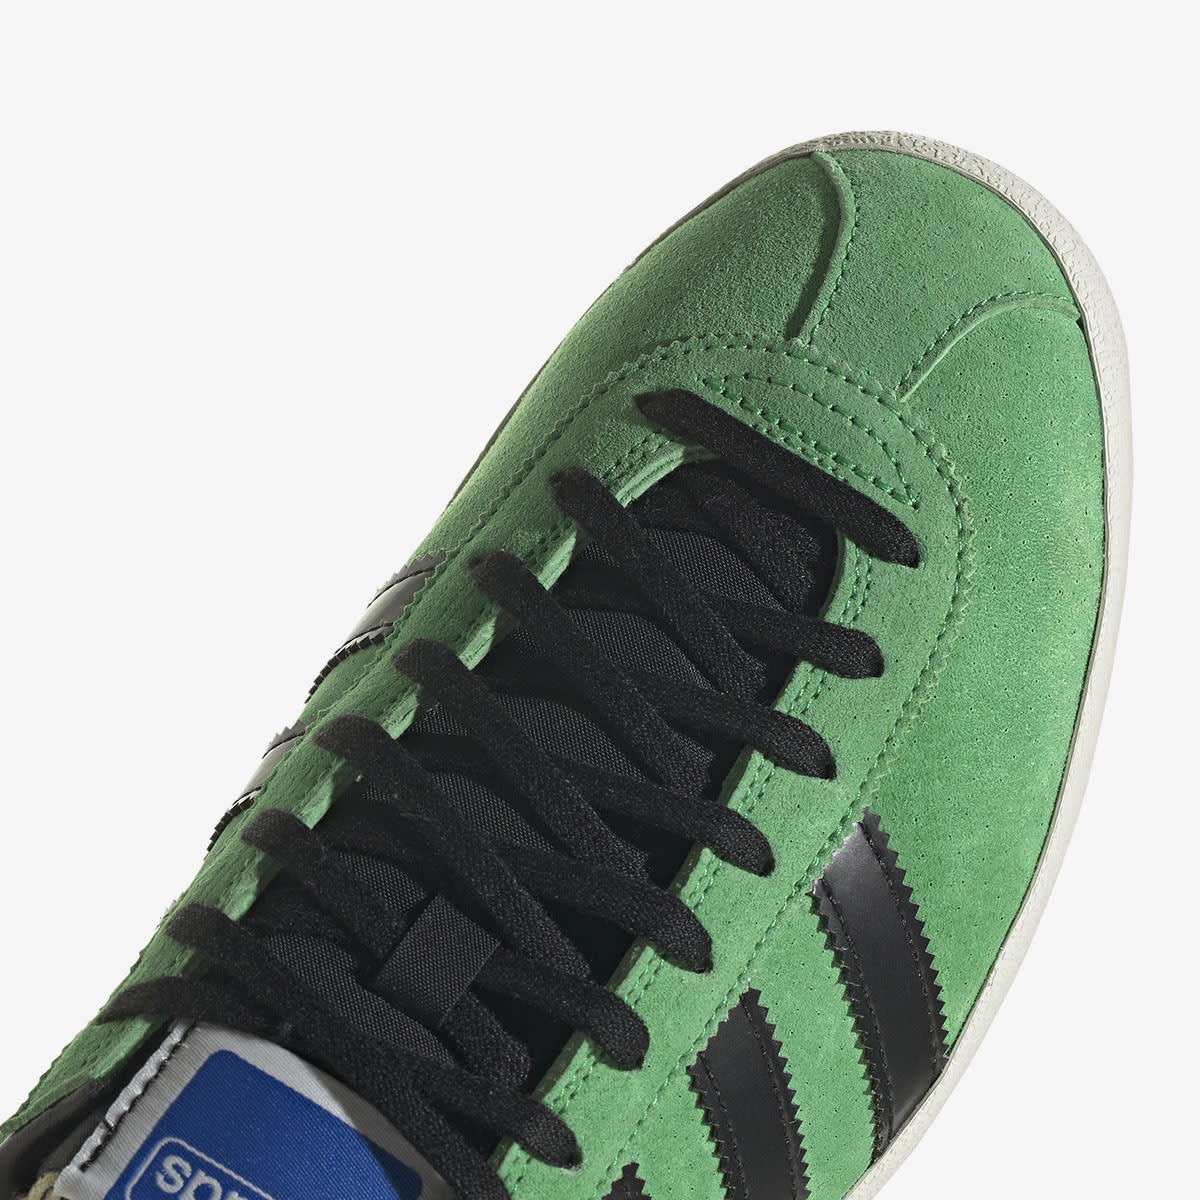 Adidas Mexicana Prototype (Vivid Green & Core Black) | END. Launches